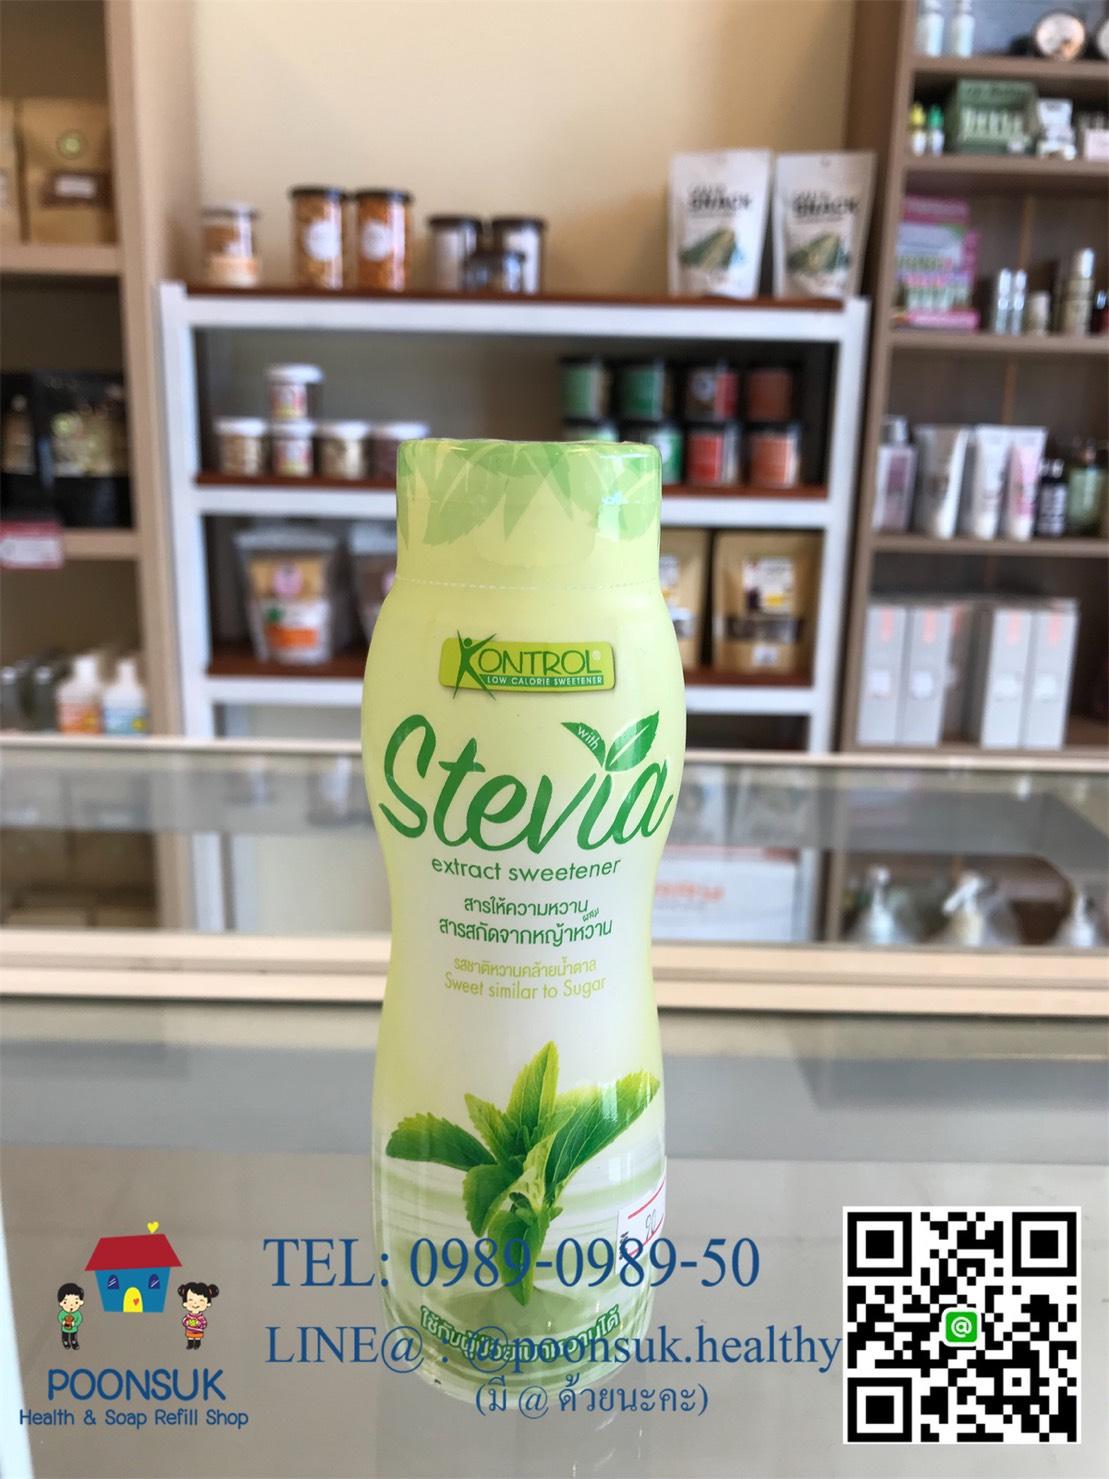 KONTROL low calorie sweetener stevia extract สารให้ความหวาน ผสมสารสกัดจาก หญ้าหวาน คอนโทรล หญ้าหวานสกัด หญ้าหวานไซรัป ไซรัปหญ้าหวาน น้ำตาลหญ้าหวาน หญ้าหวานแทนน้ำตาล หญ้าหวานsyrup syrupหญ้าหวาน steviasyrup syrupstevia ใช้กับผู้ป่วยเบาหวานได้ 340g